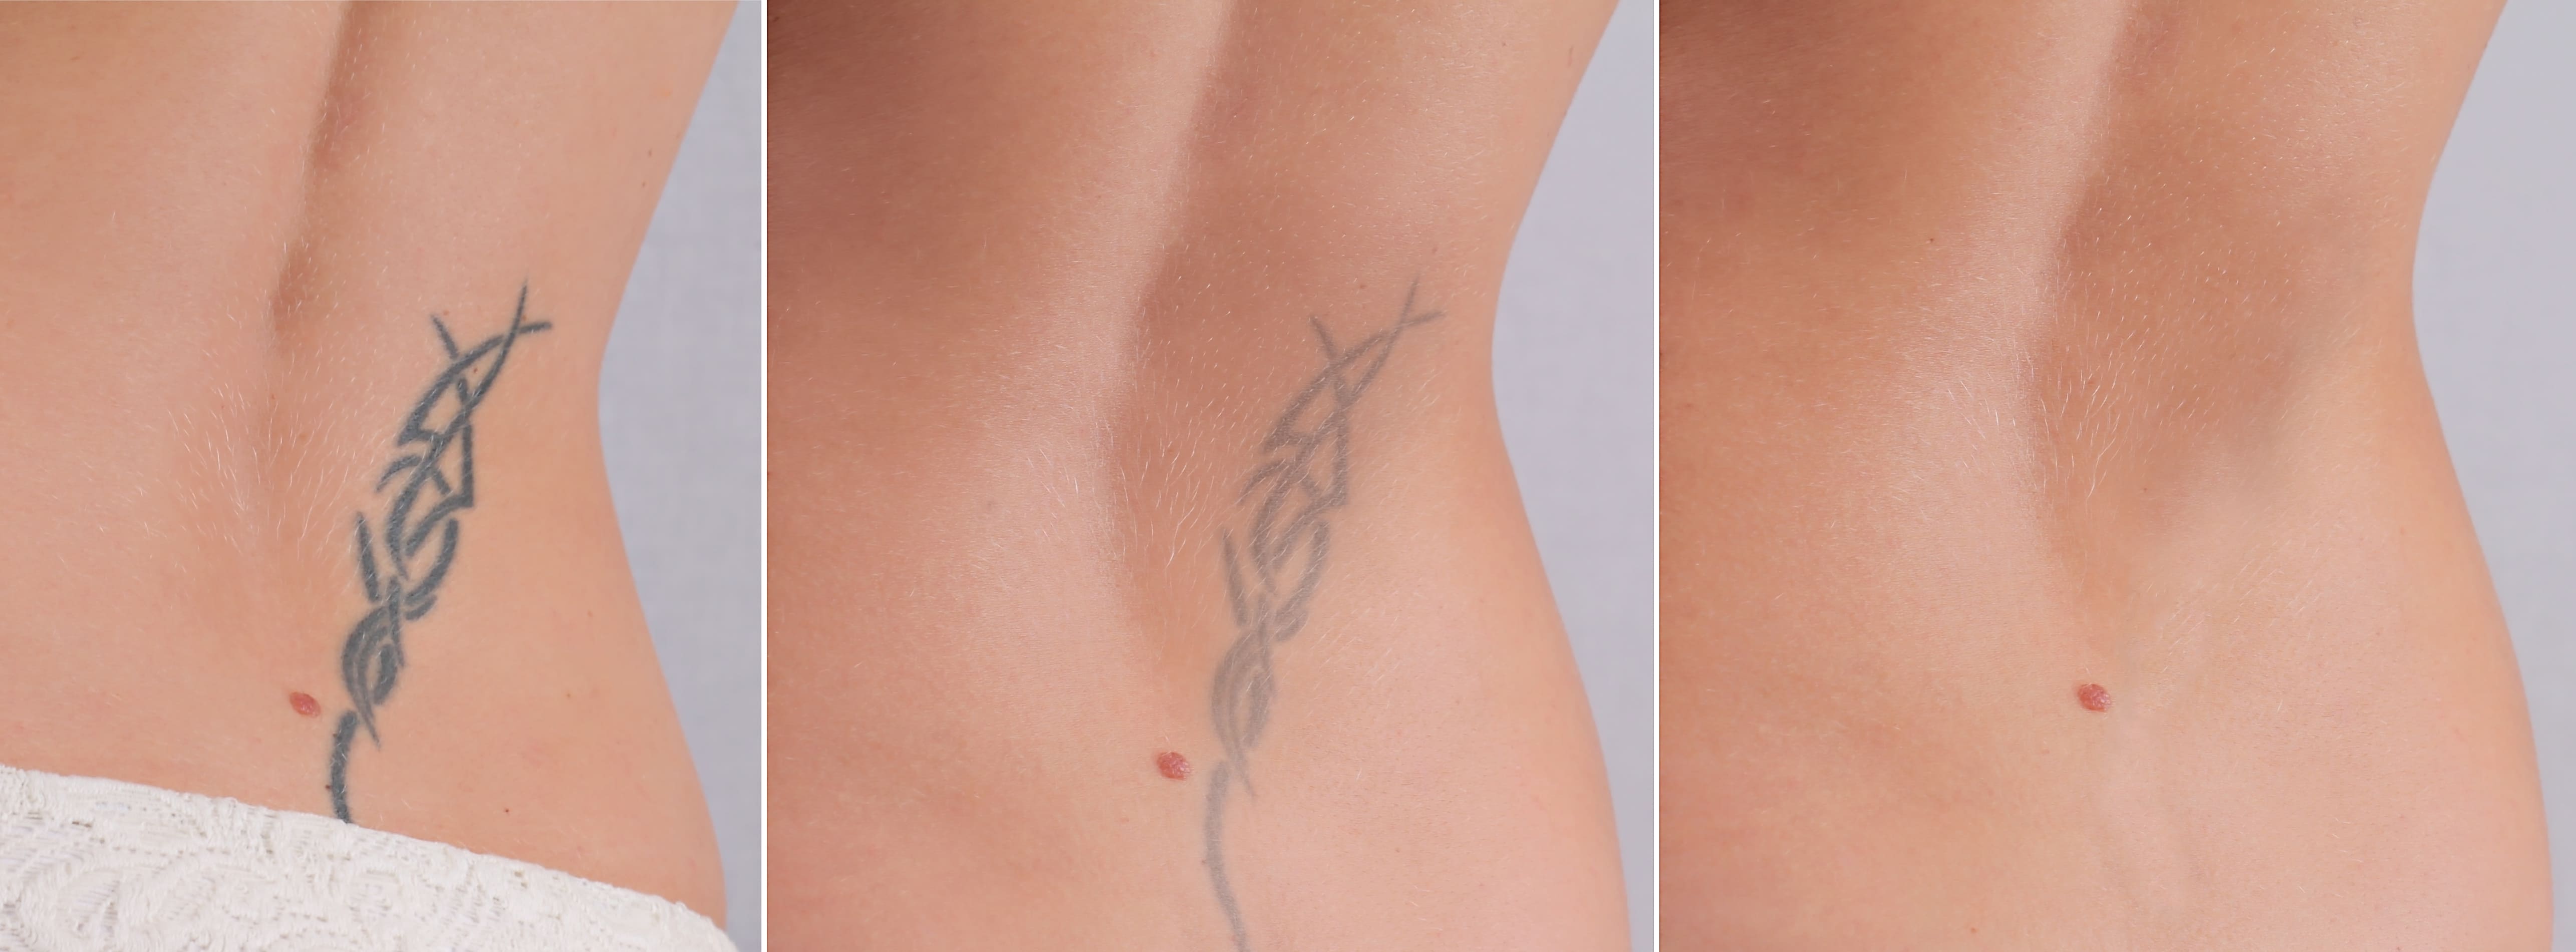 Tattoo removal | Shutterstock